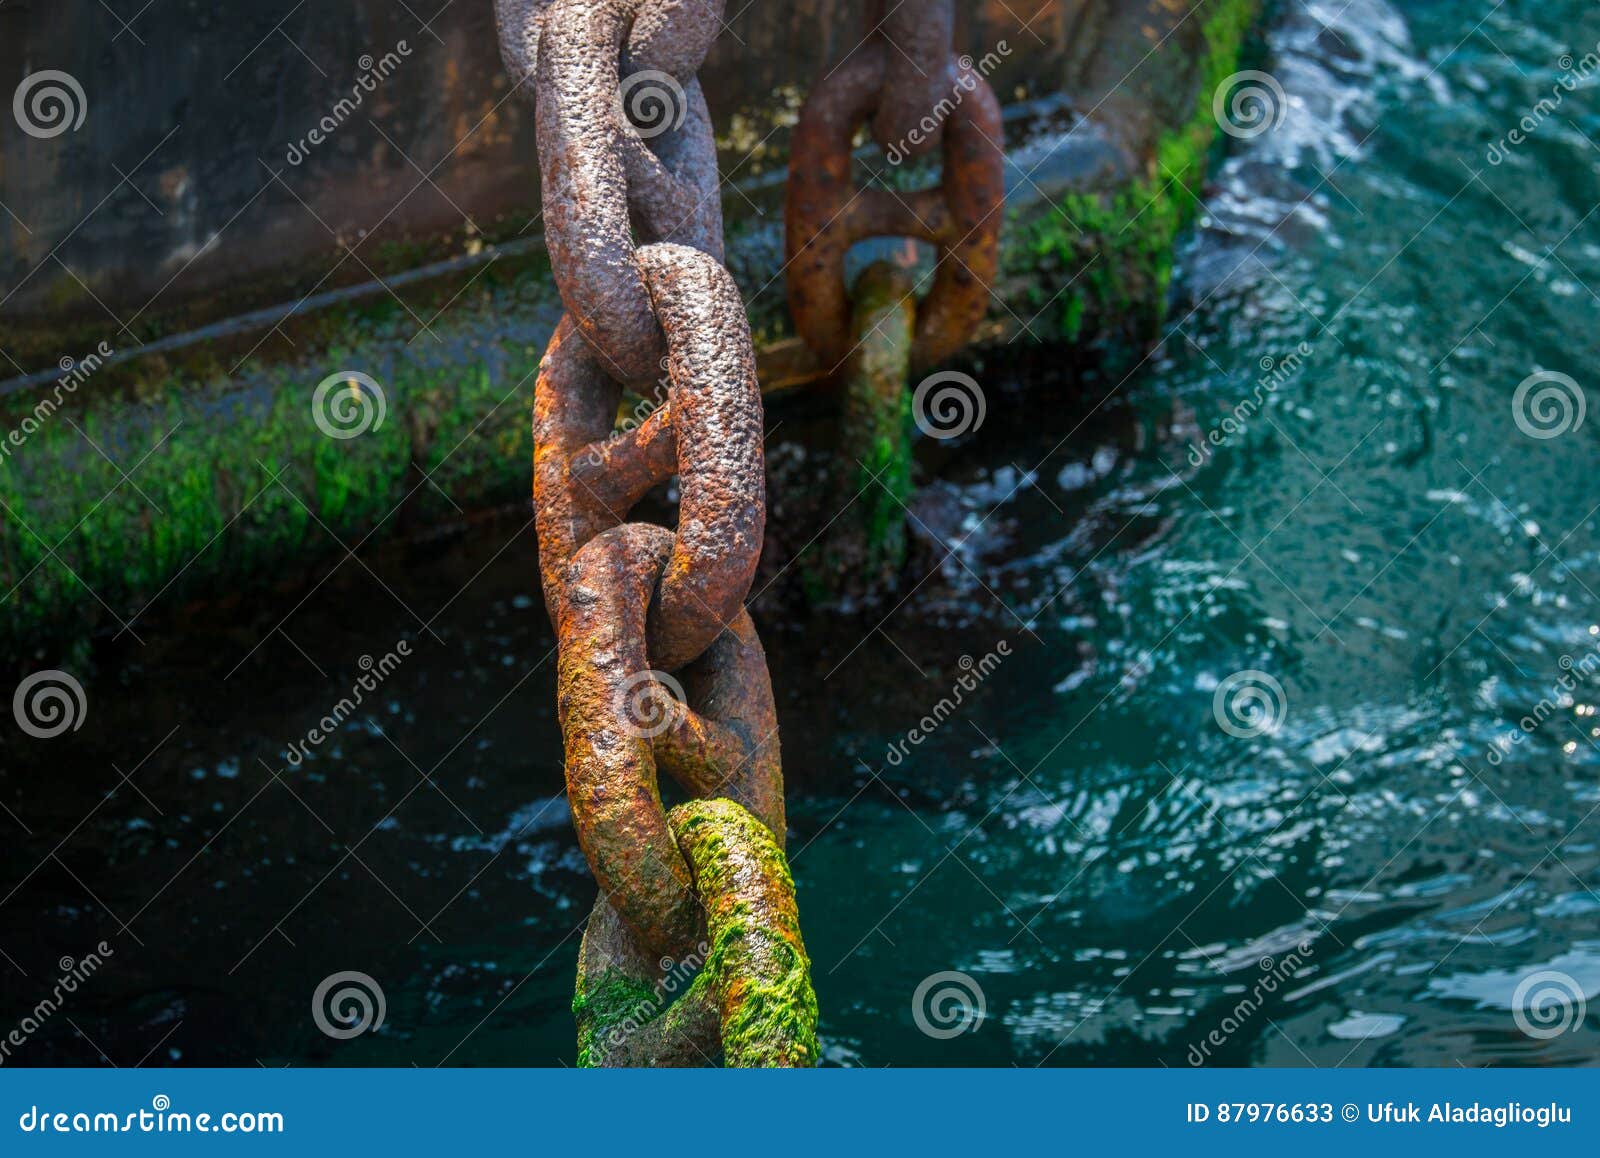 https://thumbs.dreamstime.com/z/rusty-mossy-ship-anchor-chain-dry-coast-port-87976633.jpg